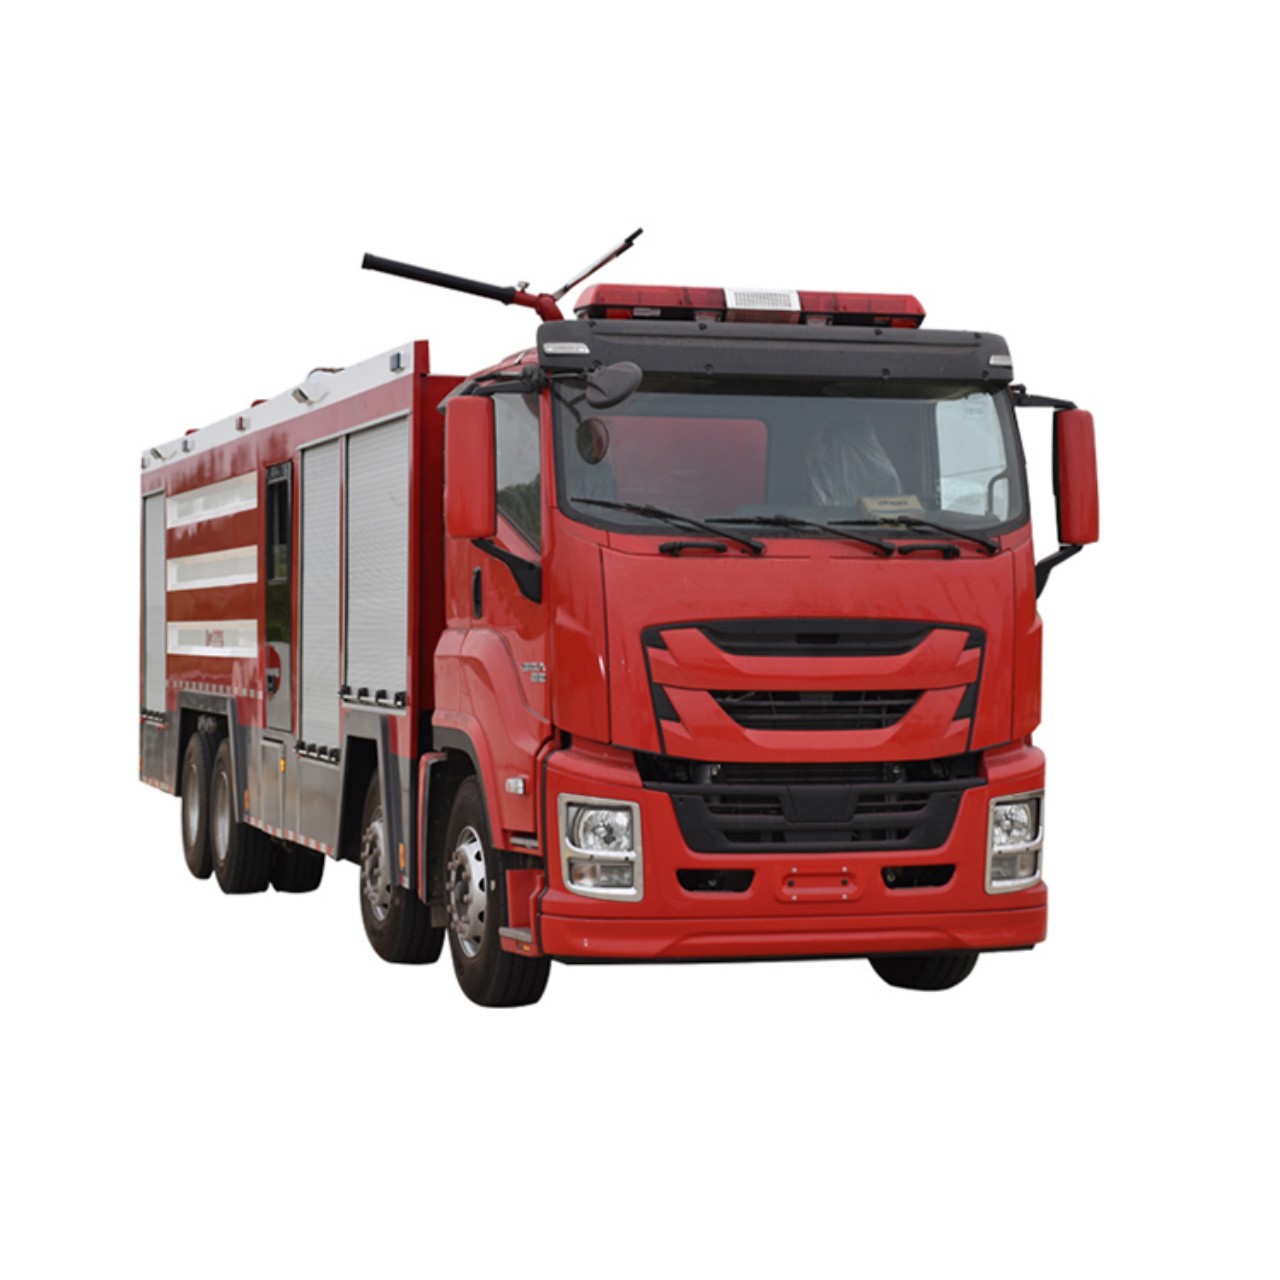 Dry Powder Fire Truck (4)